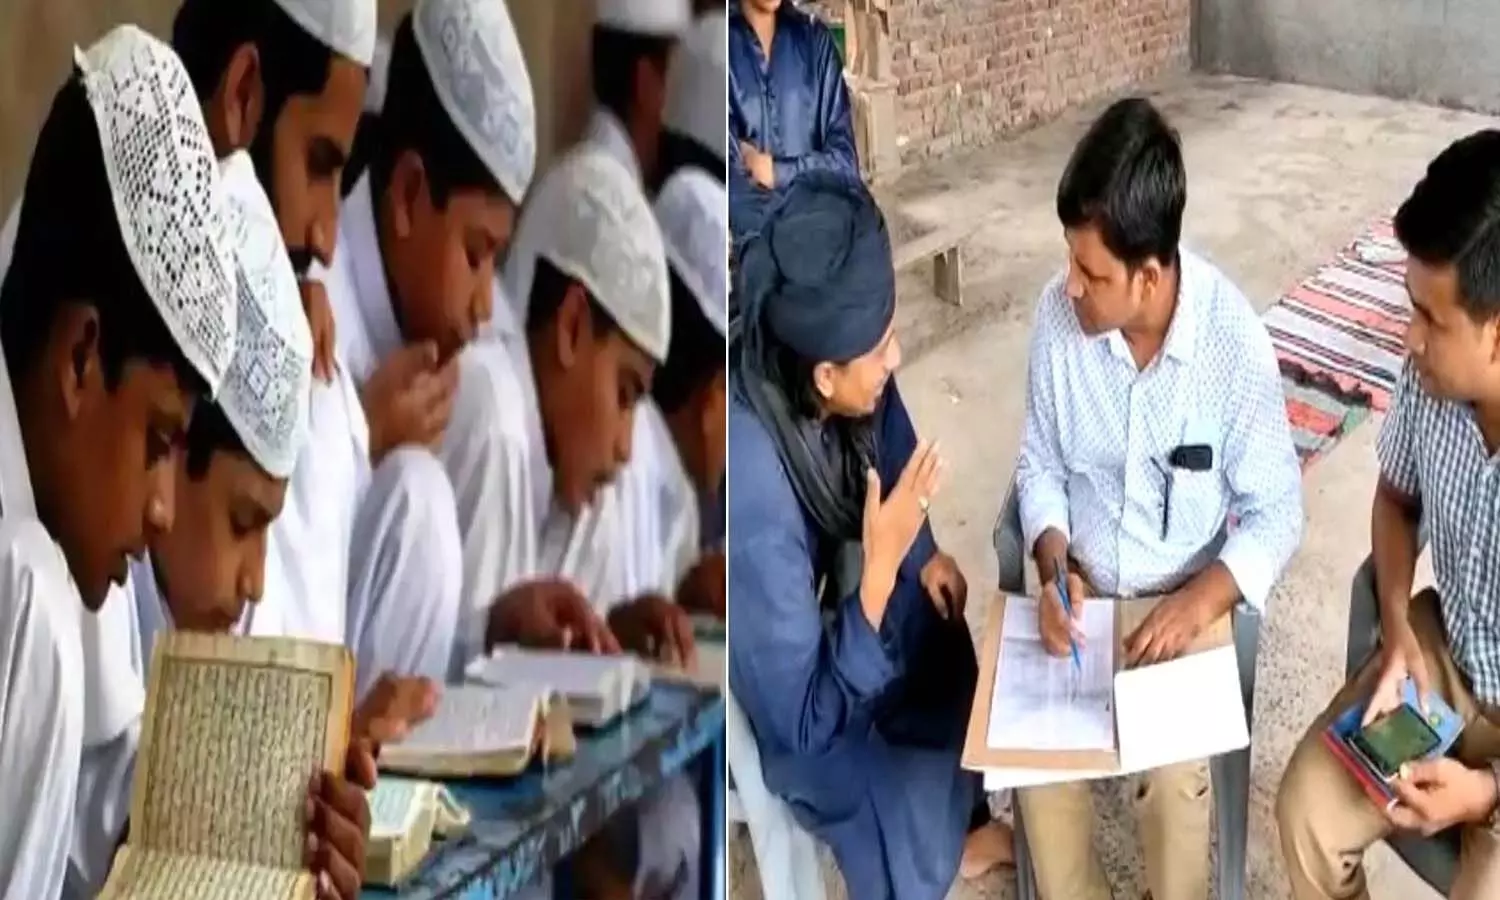 103 illegal madrassas found in Aligarh in Madrasa survey, report sent to the government